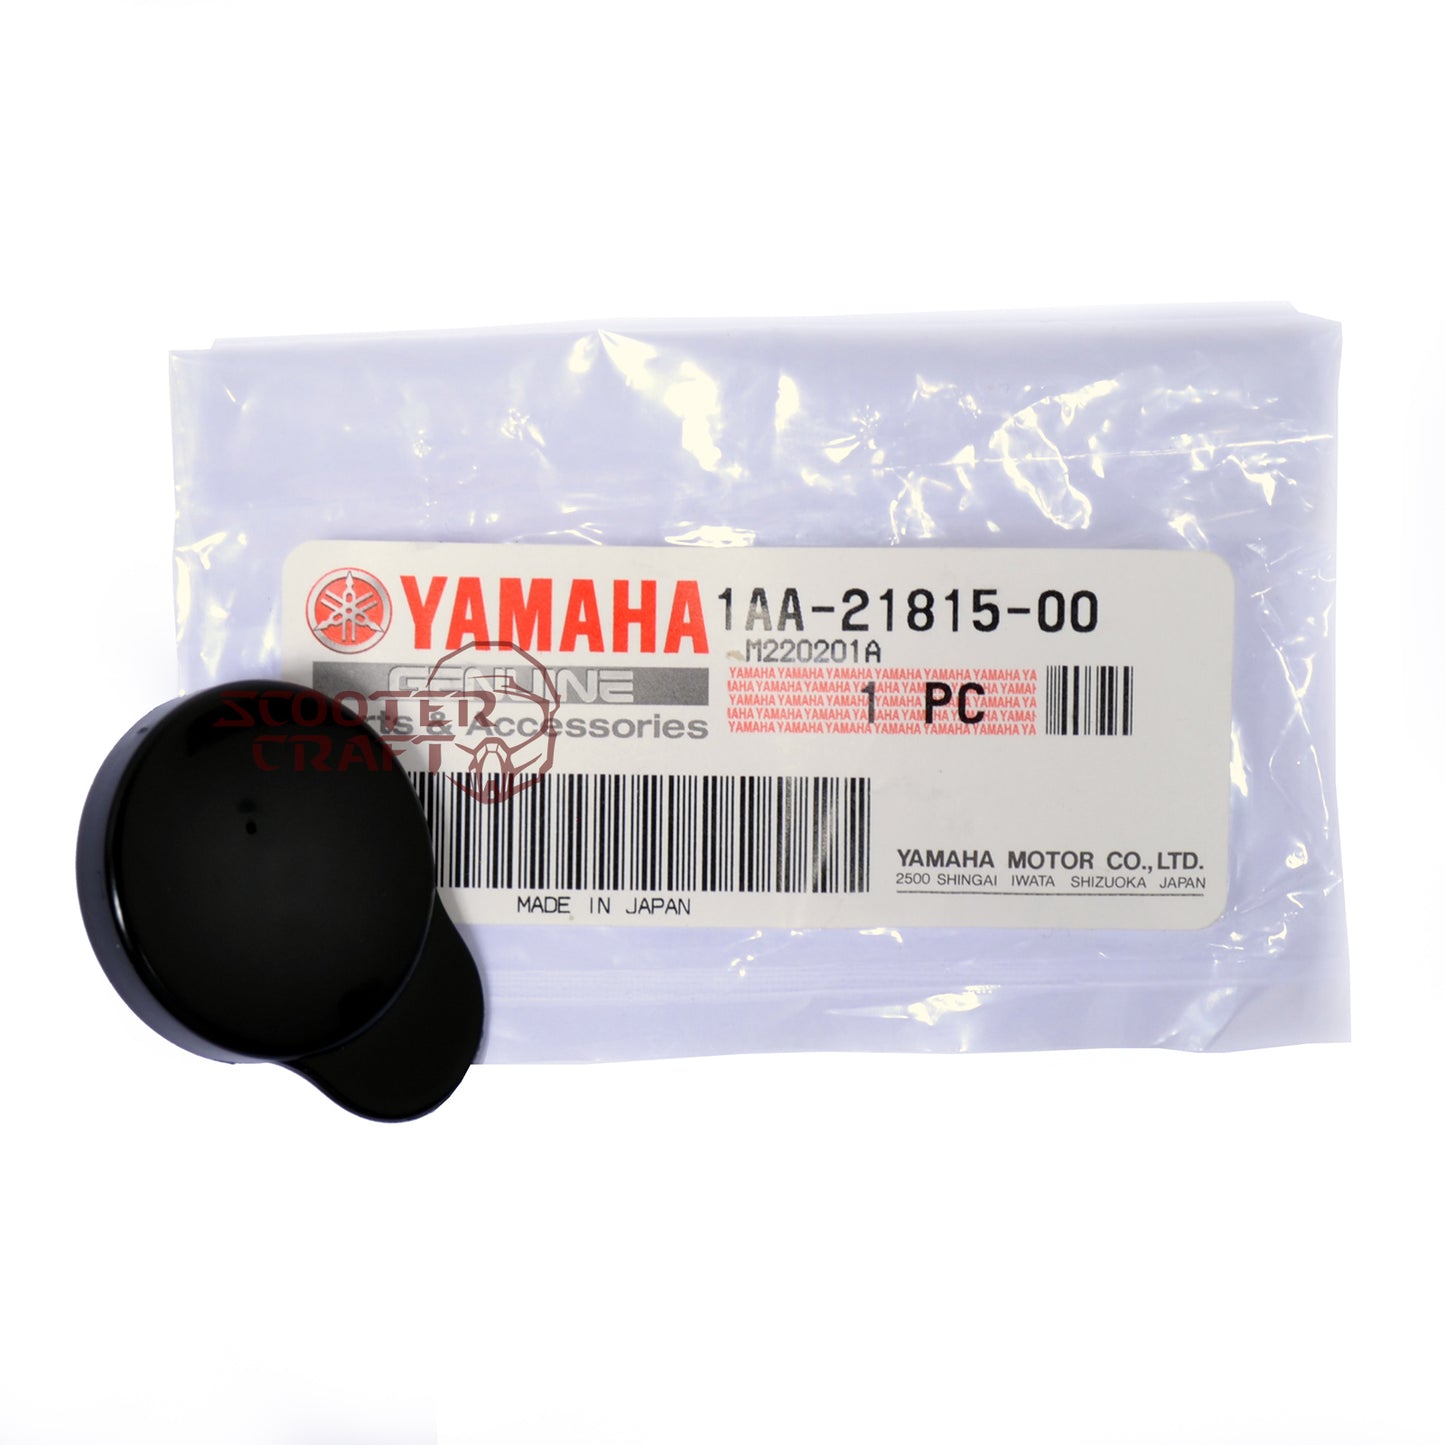 Coolant reservoir cap Yamaha YP 250 Majesty, XP 500 T-MAX, TDM 850, FJR 1300, genuine 1AA-21815-00